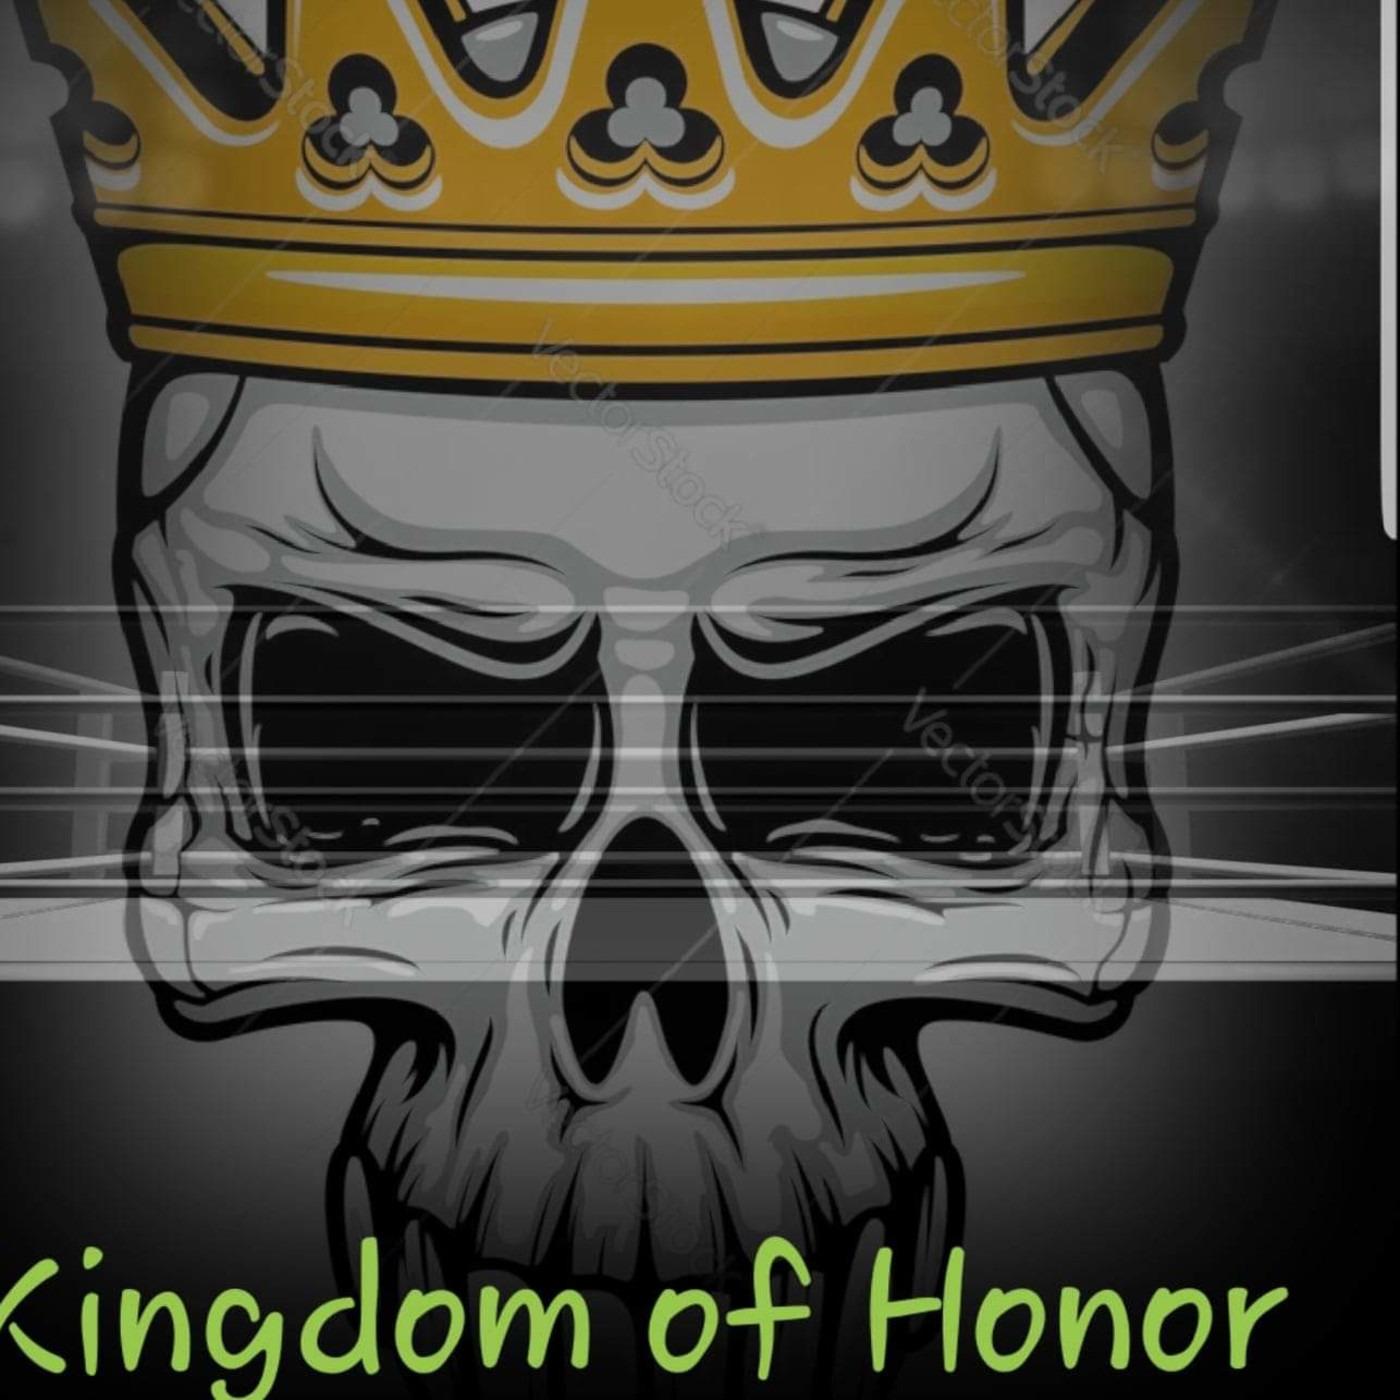 Kingdom of Honor